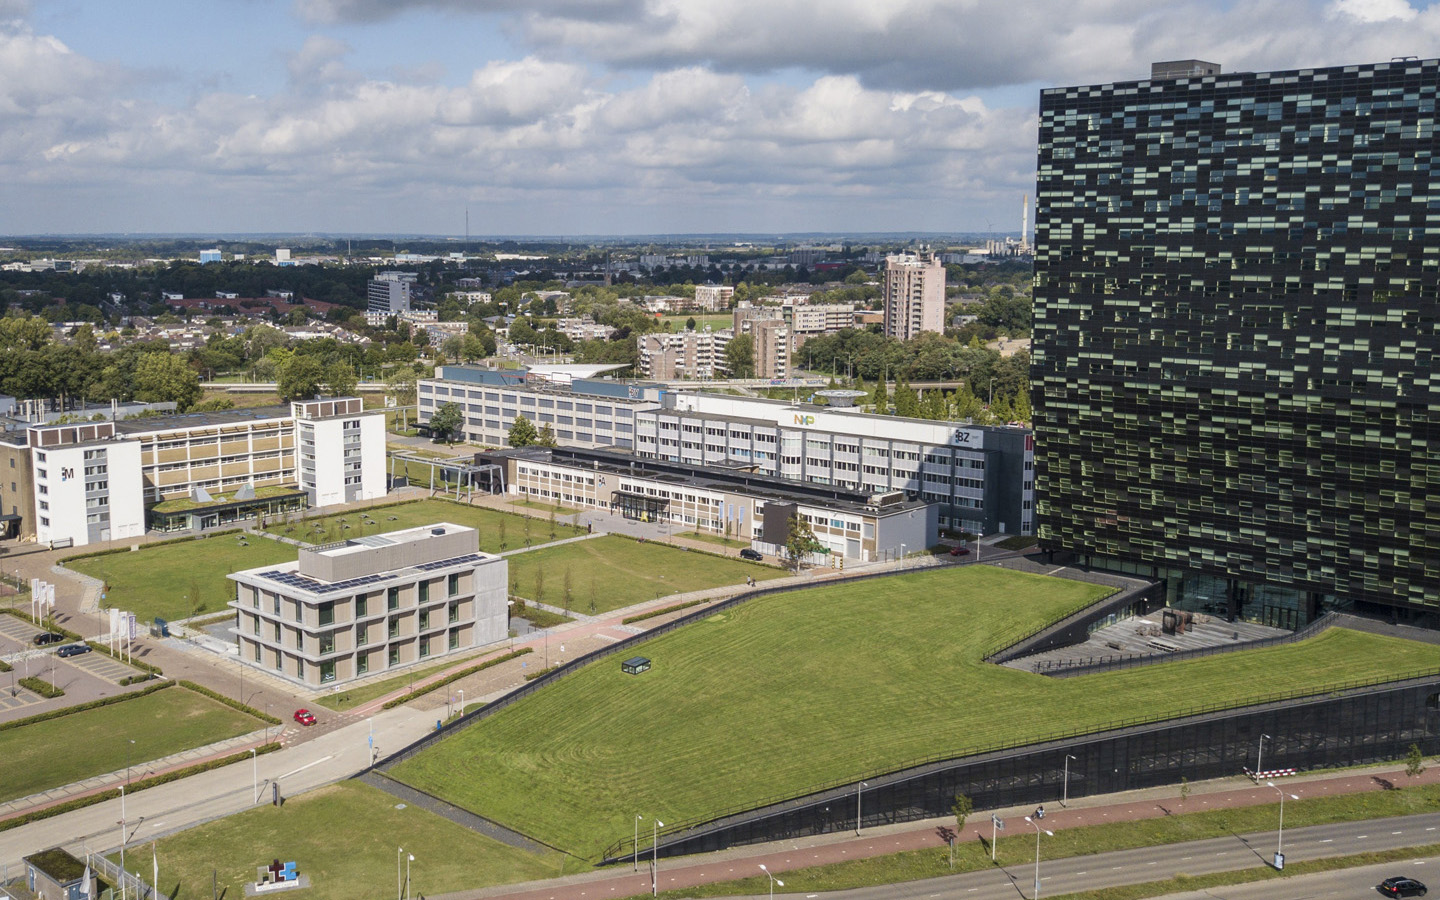 Novio Tech Campus (NTC) in Nijmegen, The Netherlands